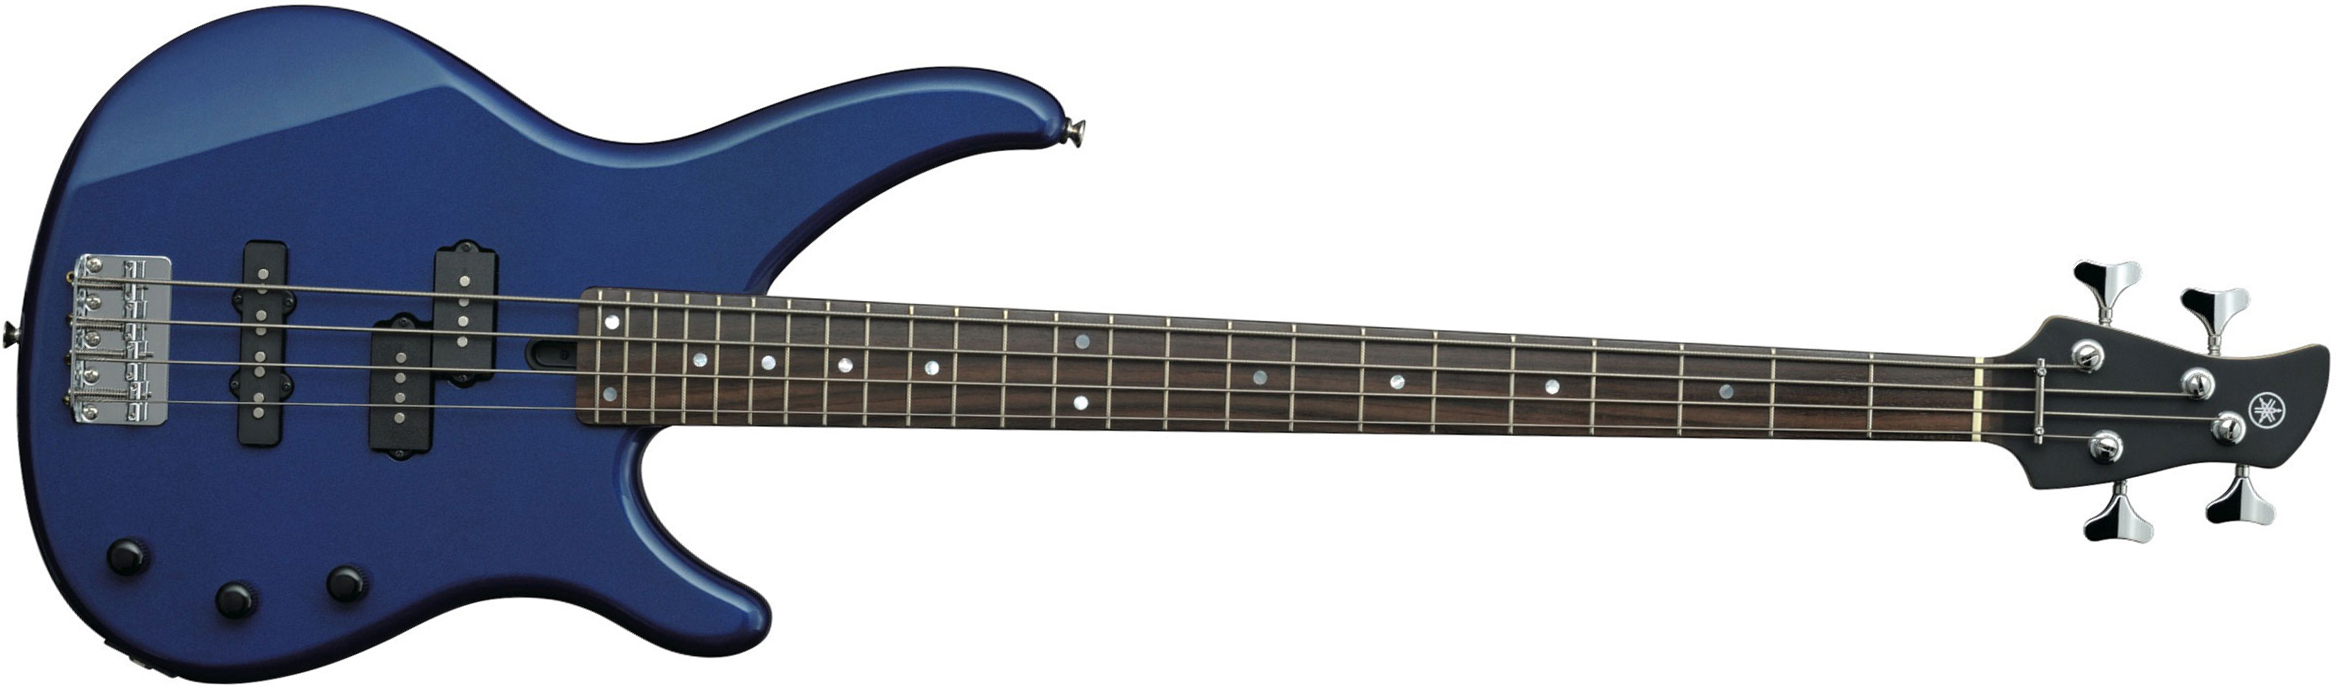 Yamaha Trbx174 - Dark Blue Metallic - Solid body electric bass - Main picture